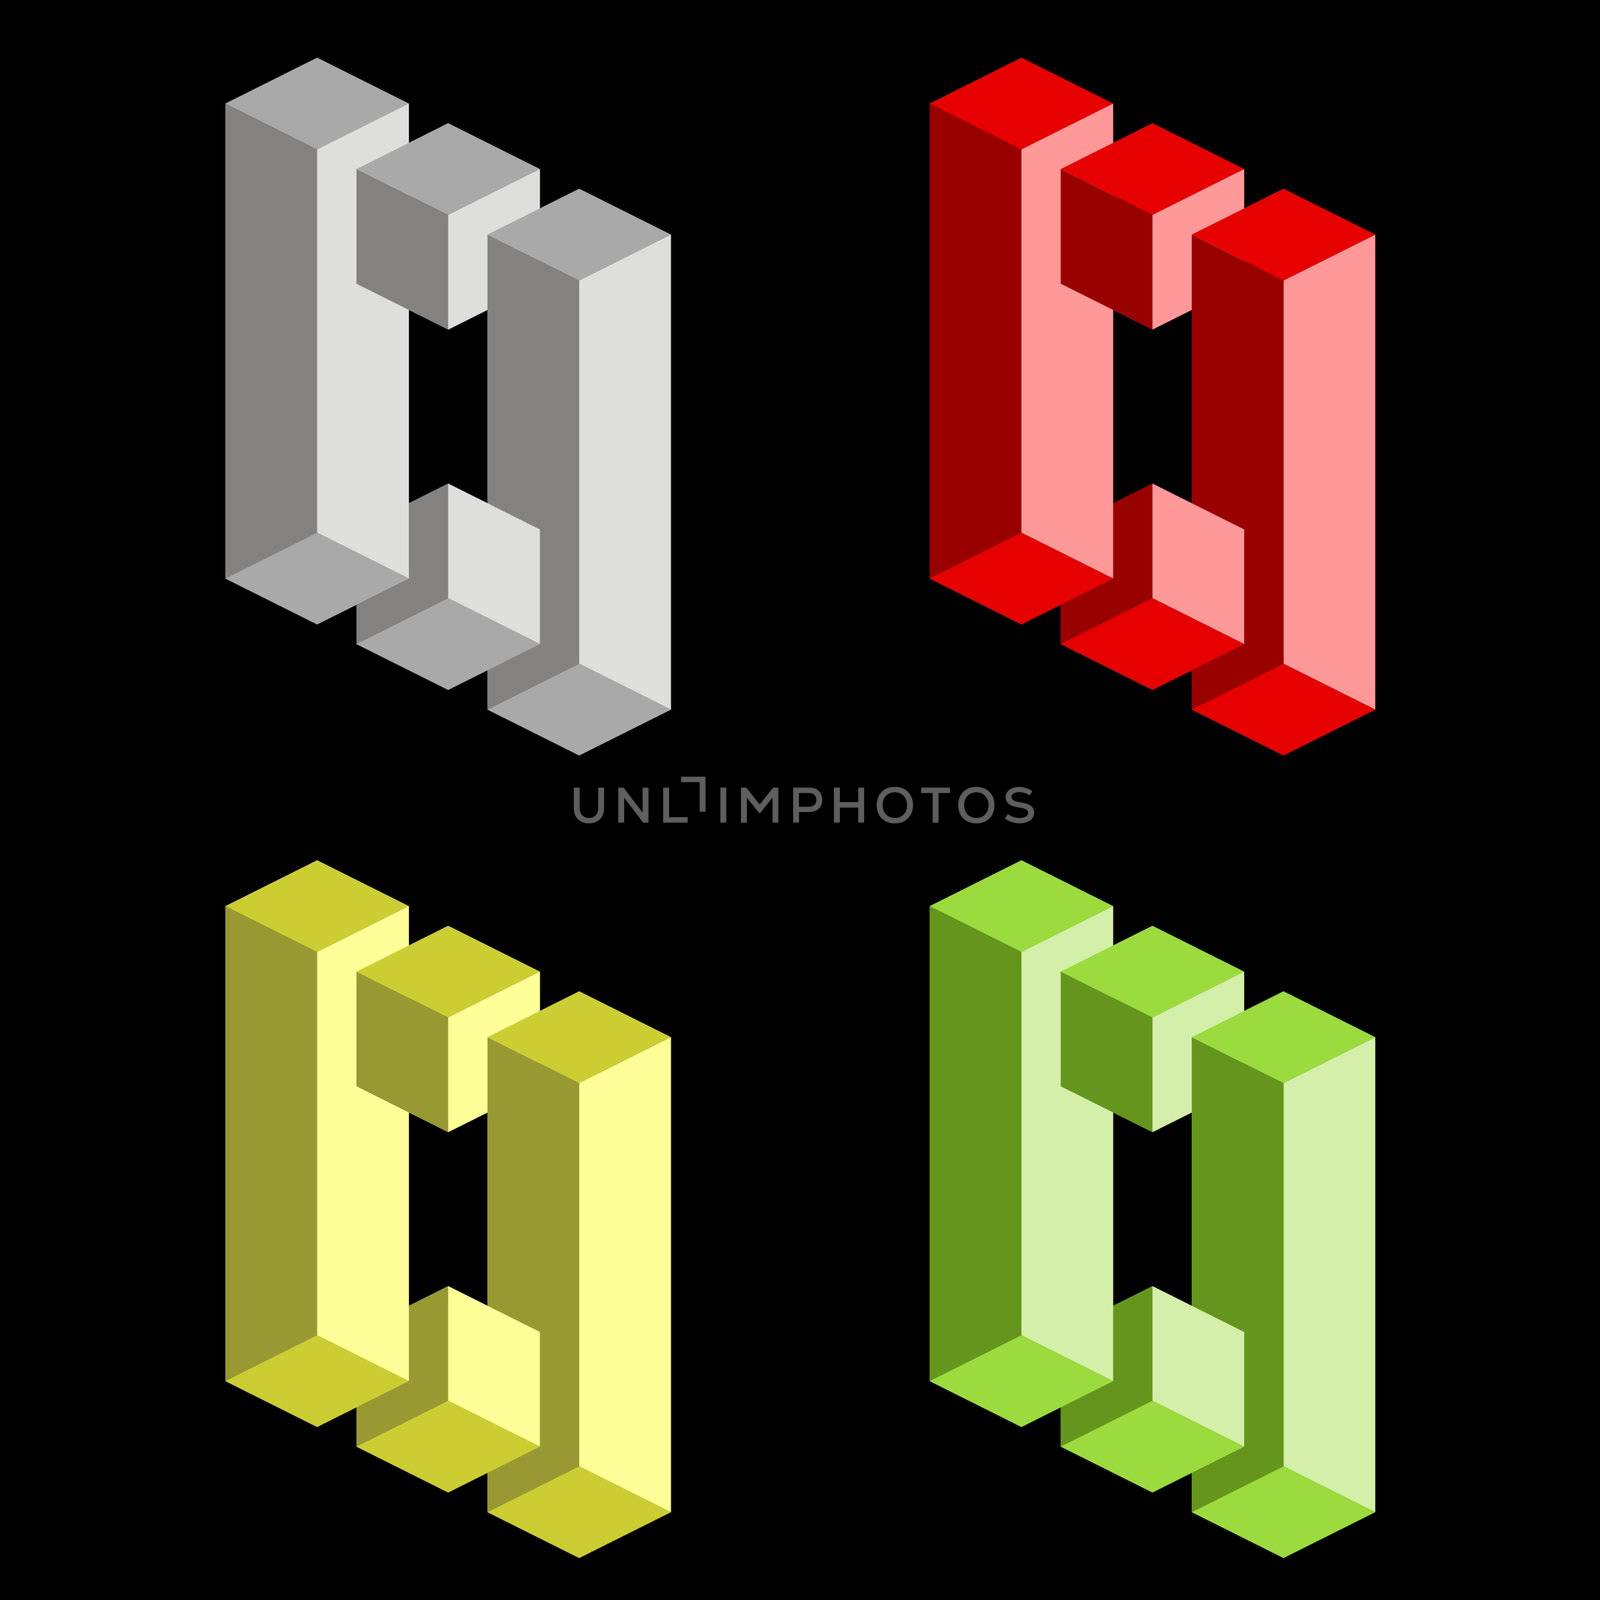 Optical illusion, colorful blocks